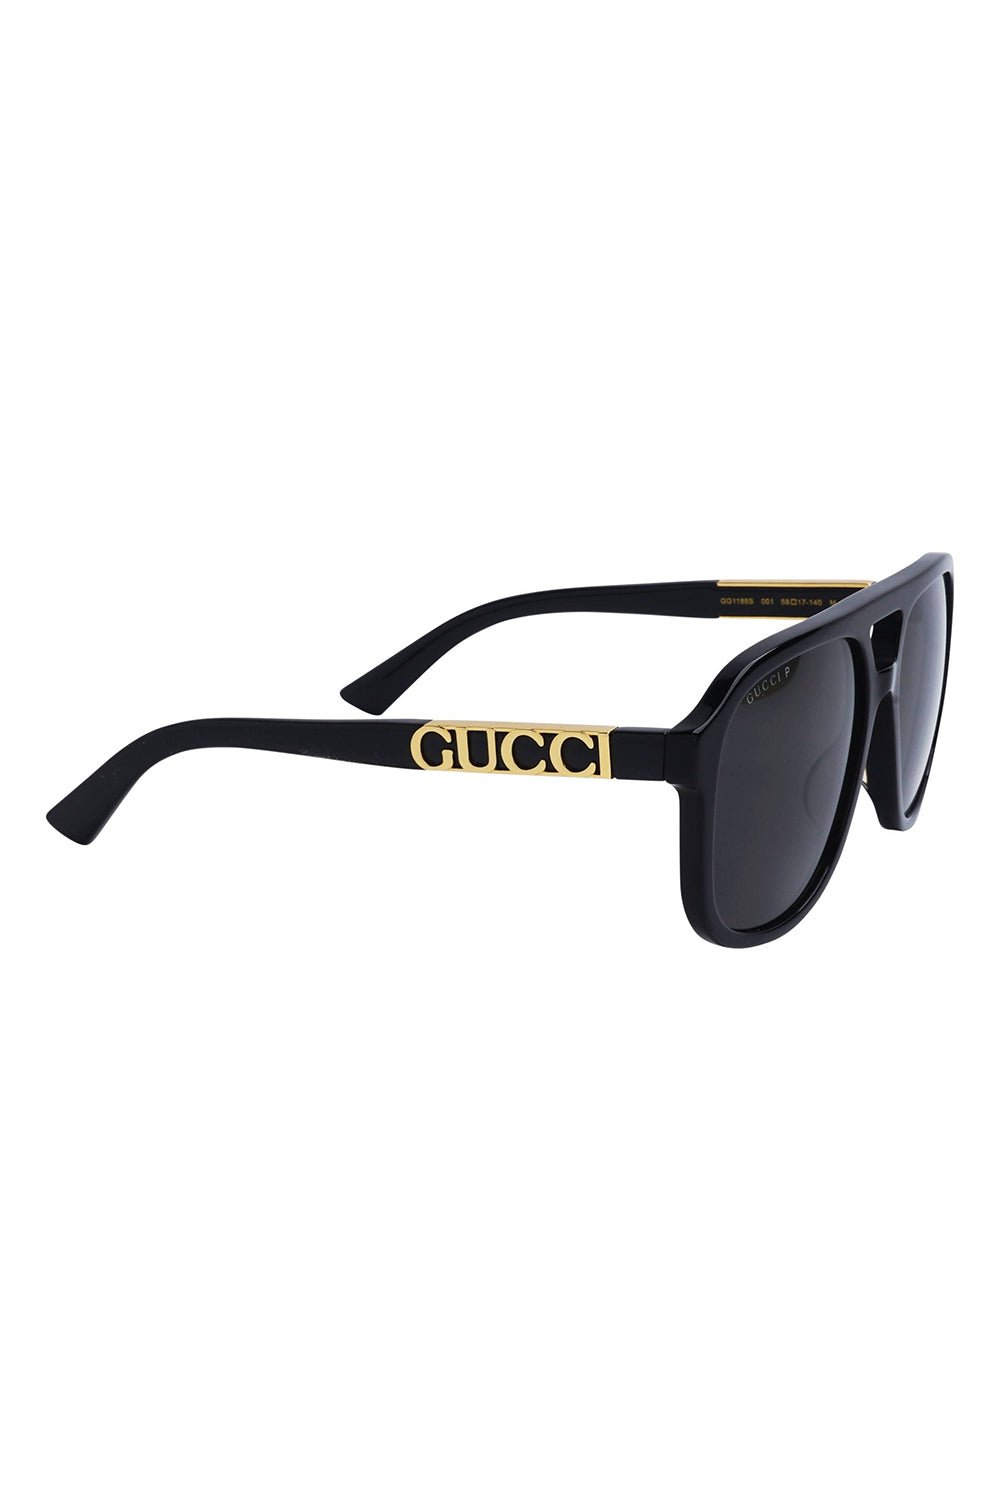 GUCCI-Mask Sunglasses-BLACK/GREY